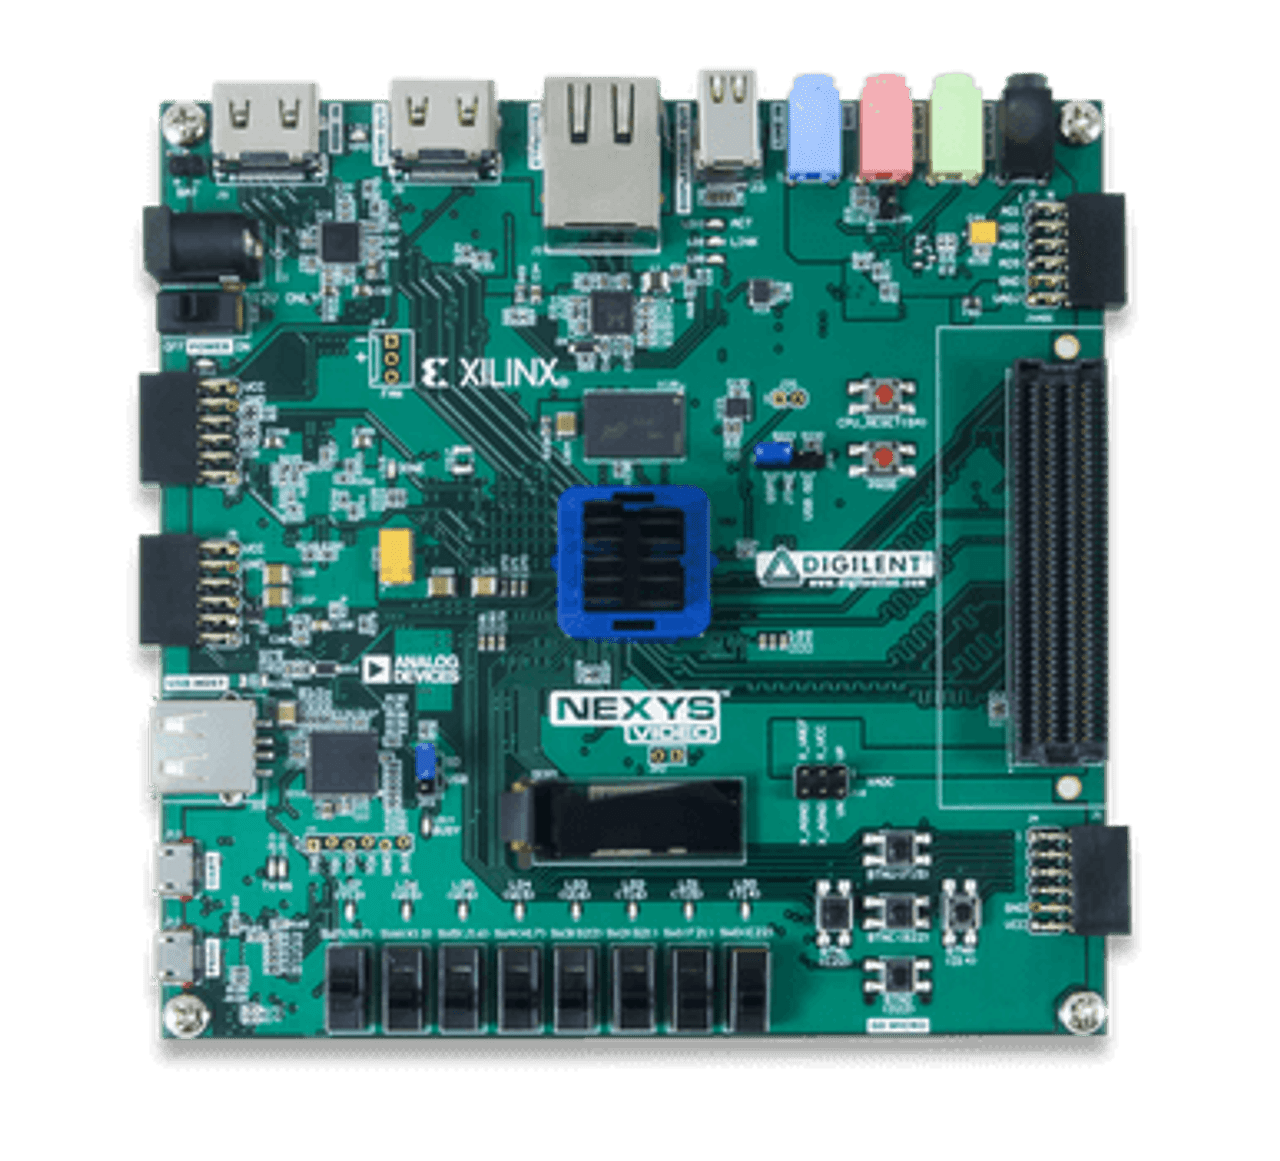 Nexys Video Artix-7 FPGA: Trainer Board for Multimedia